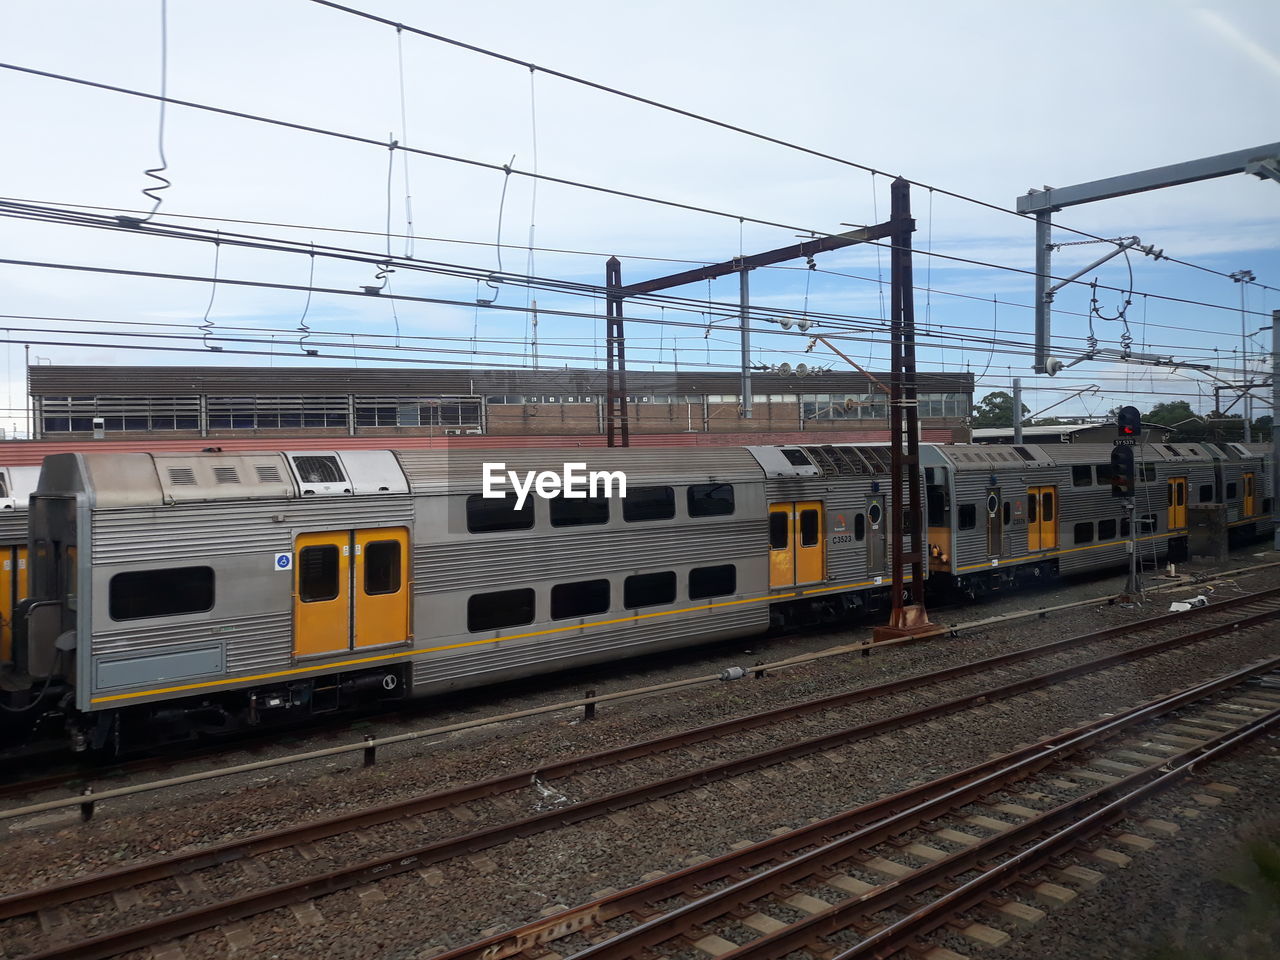 Train on railroad tracks against sky. this is sydney train service of australia.